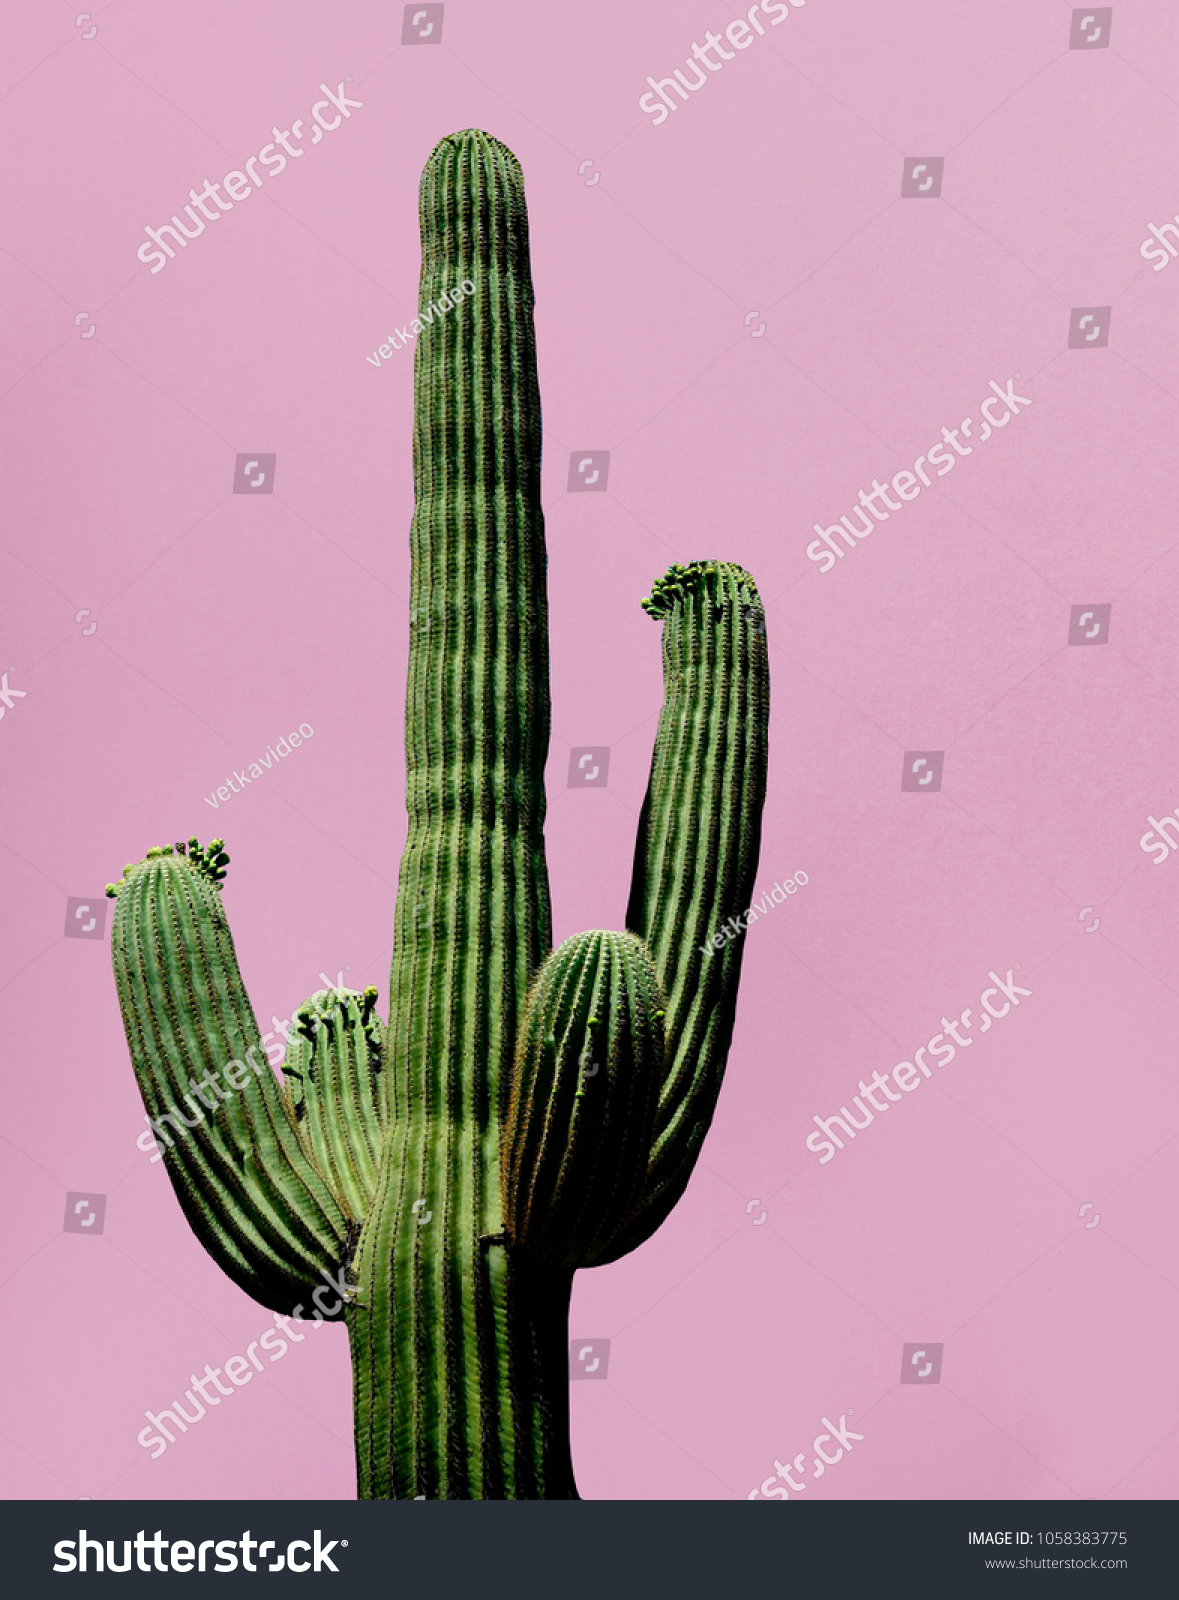 Cactus on the pink background 
Minimal creative stillife #1058383775